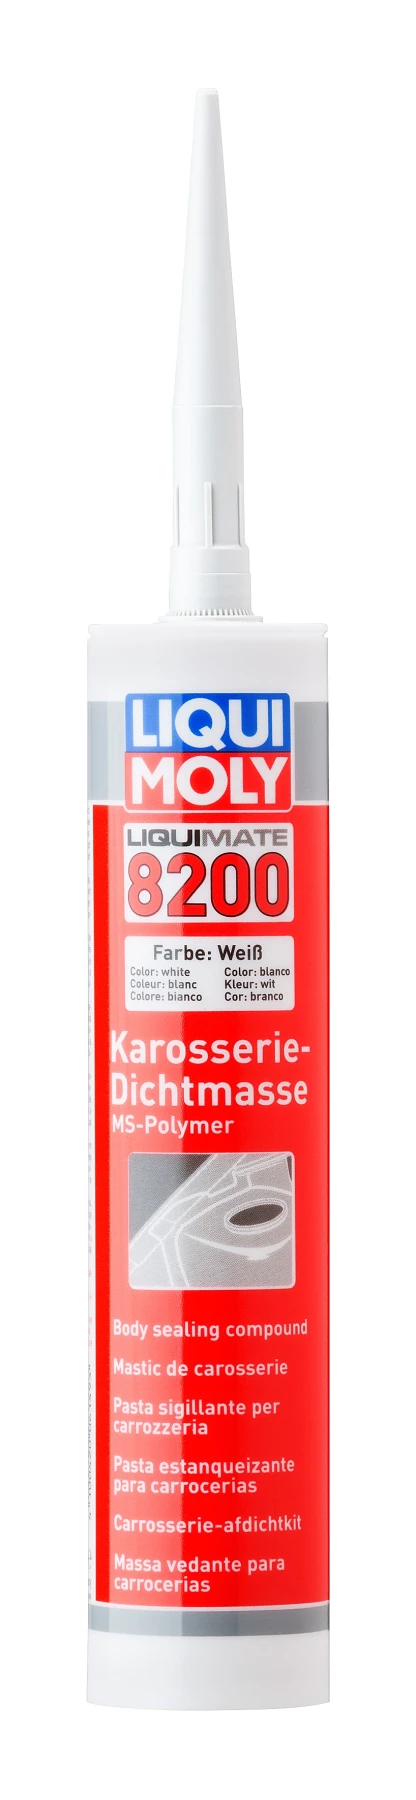 6149 LIQUI MOLY GmbH 6149 Těsnicí hmota liquimate 8200 (ms-polymer) - bílá LIQUI MOLY